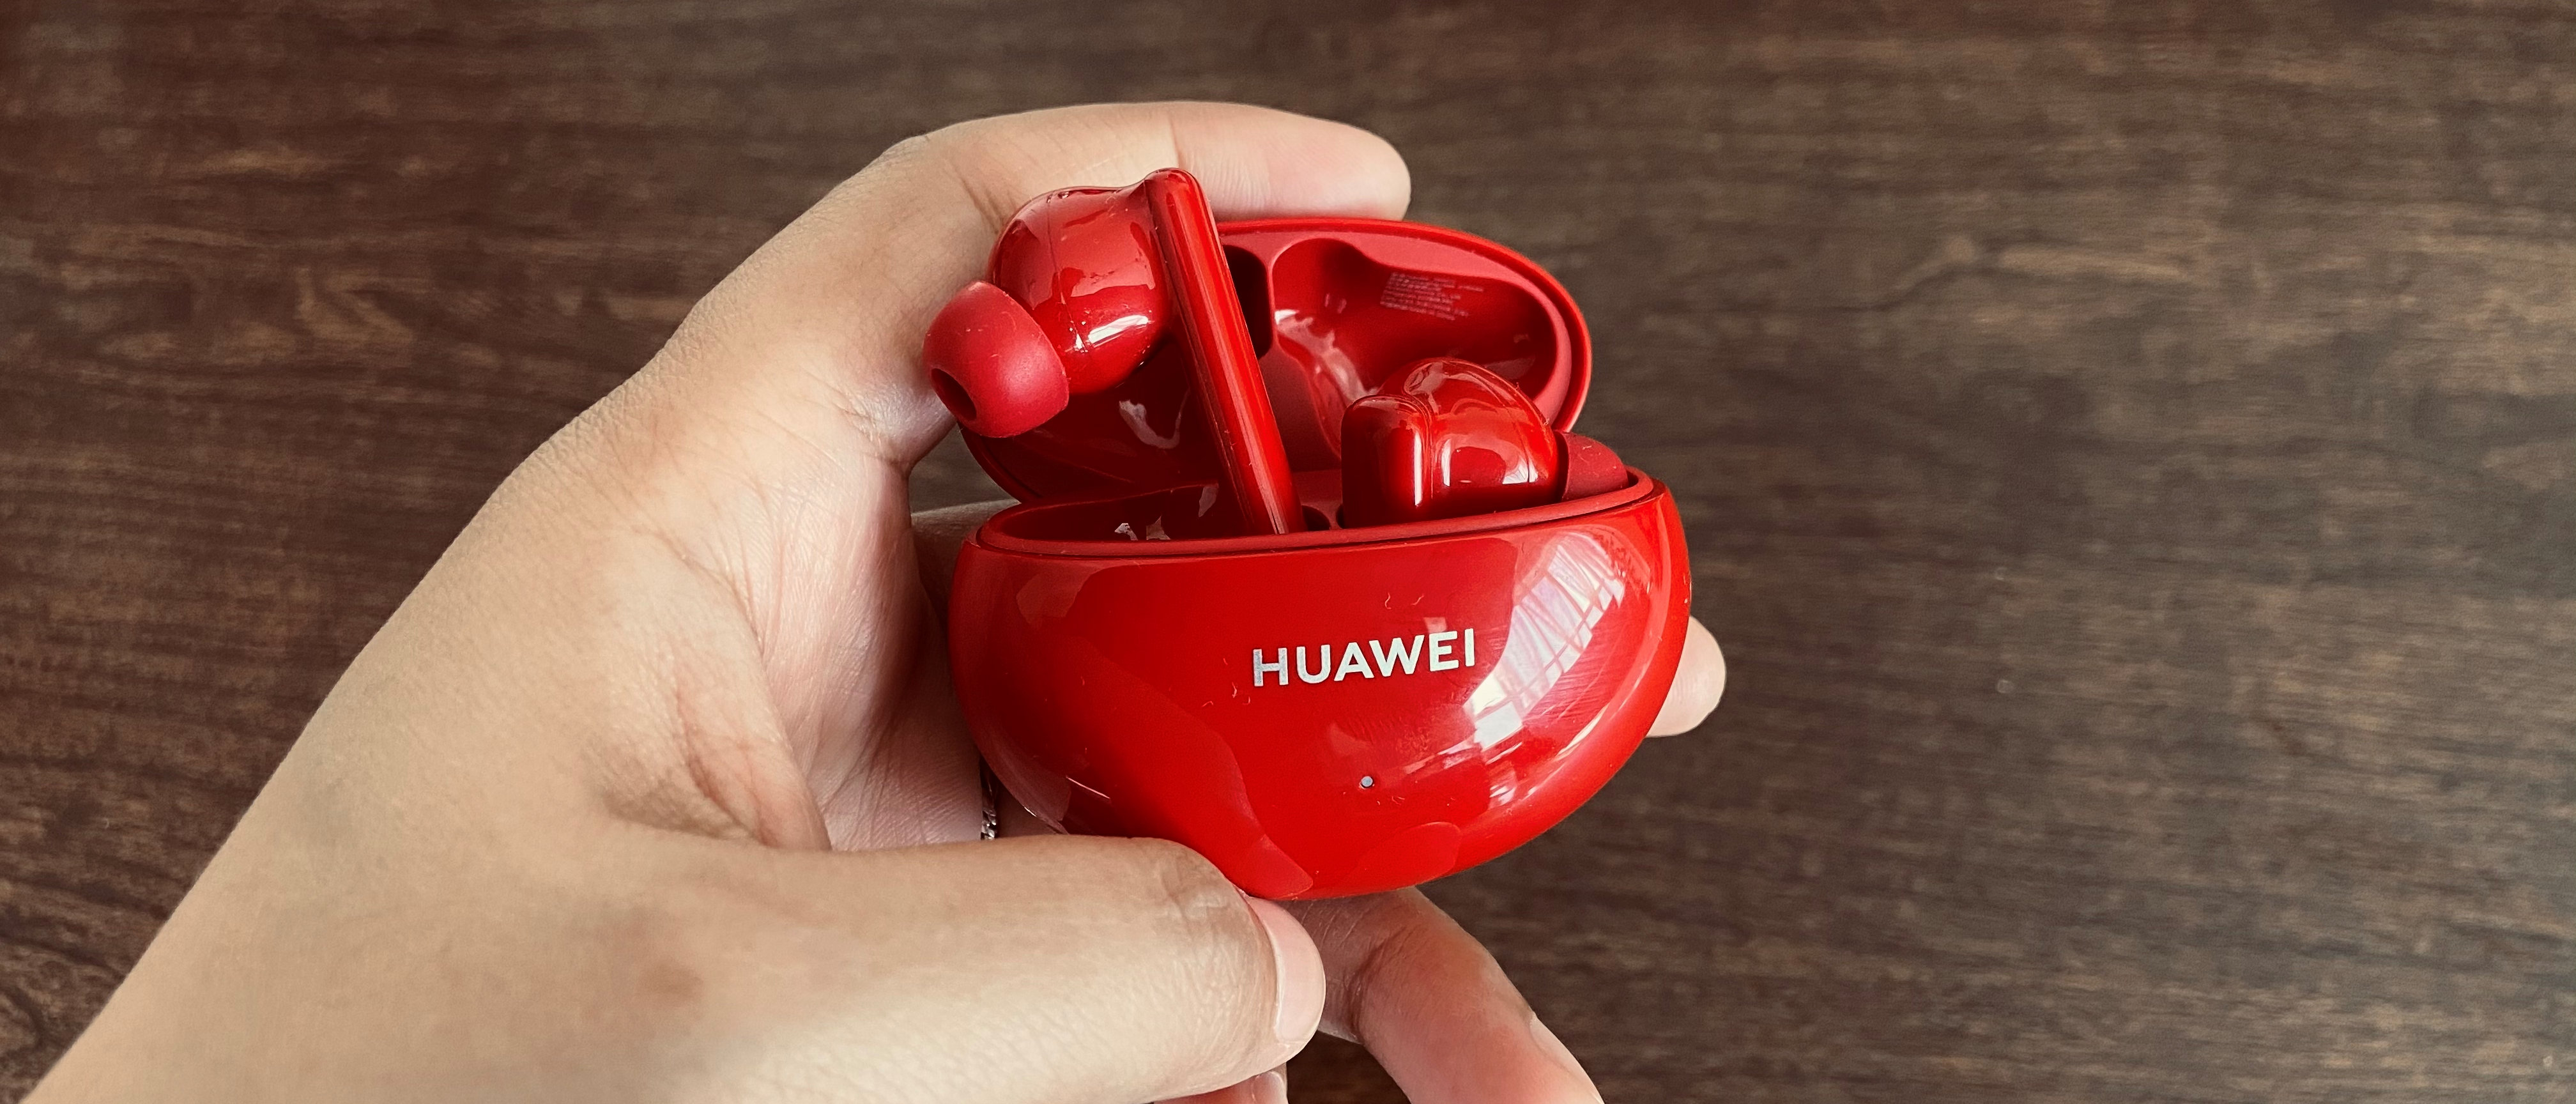 Huawei buds купить. Huawei freebuds 4i. Беспроводные наушники Huawei freebuds 4i Red. Наушники TWS Huawei freebuds 4. Huawei freebuds 4i красные наушники.